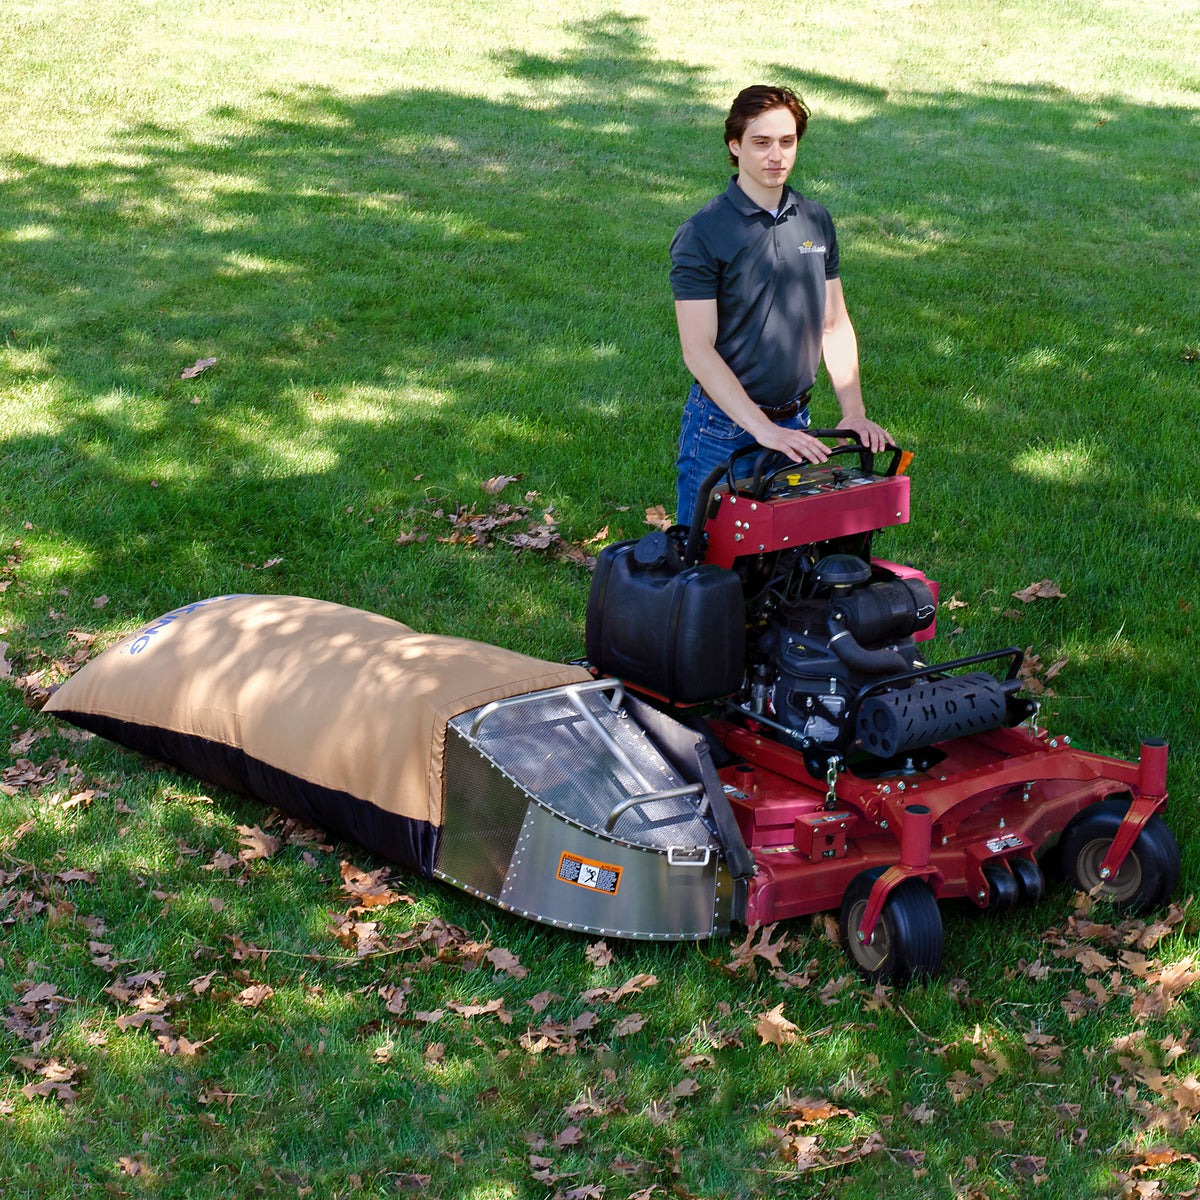 TerraKing review: Slay autumn leaves with TerraKing's riding mower